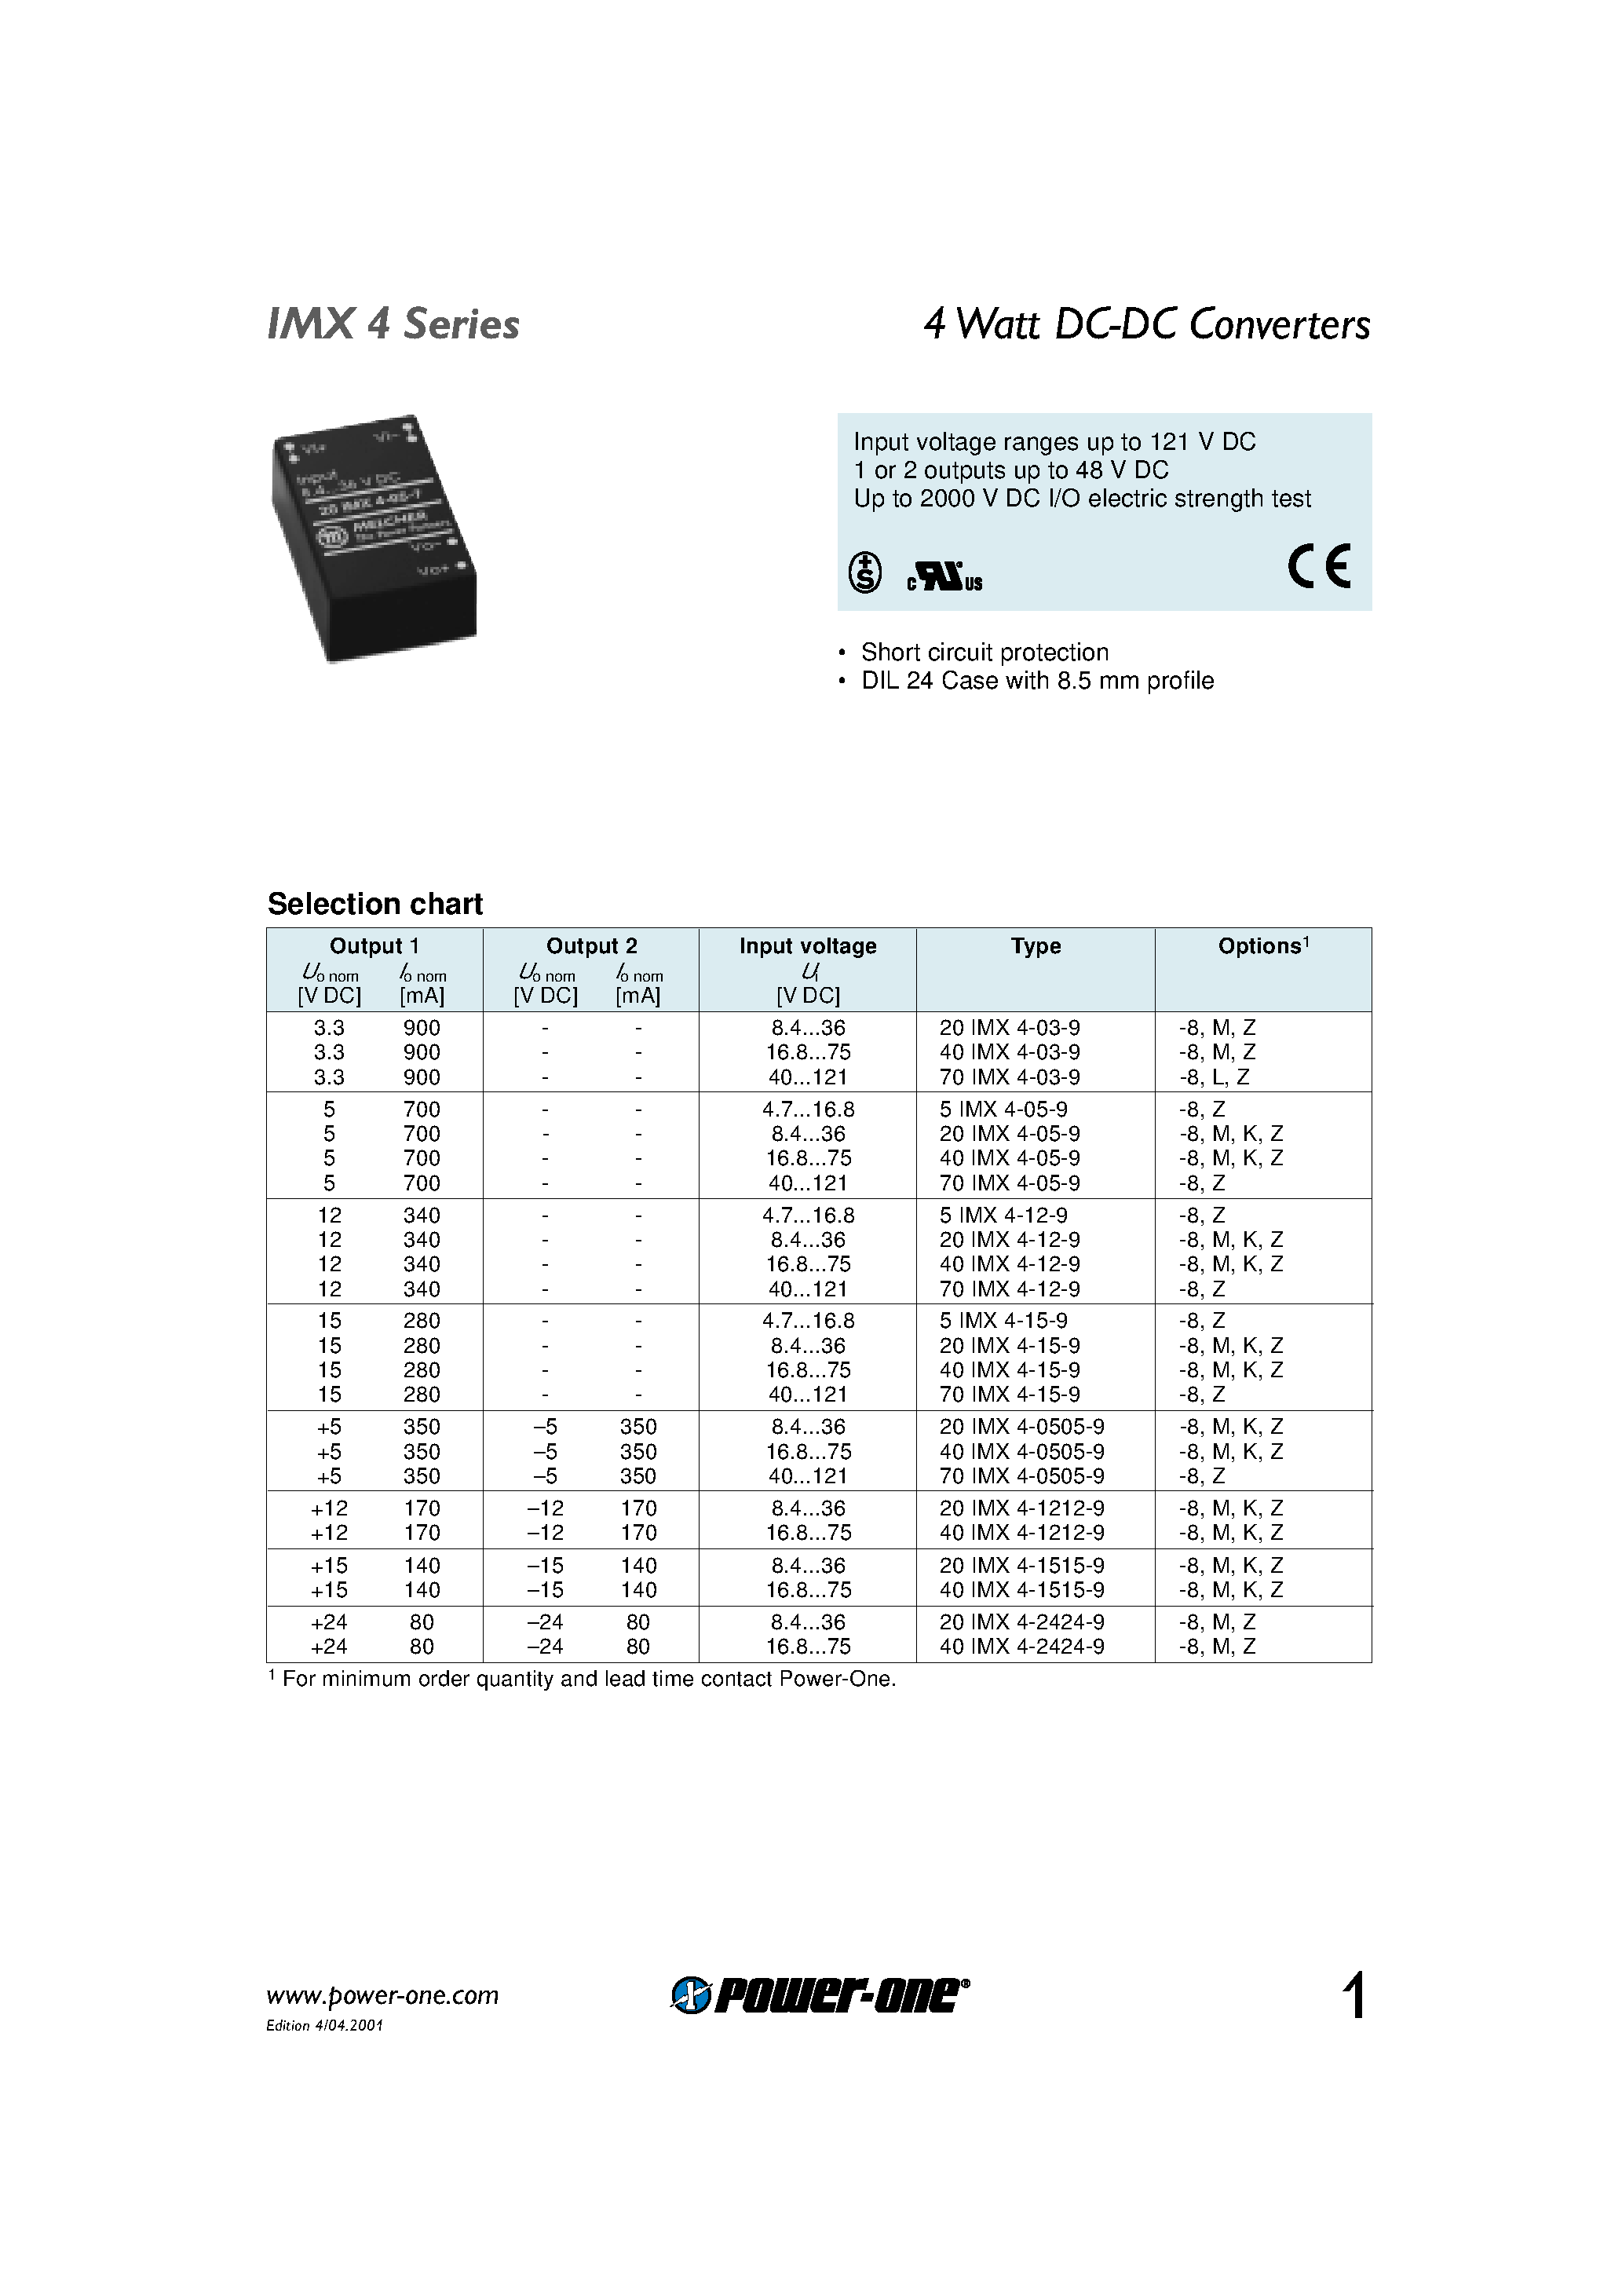 Даташит 40IMX4-1515-9 - 4 Watt DC-DC Converters страница 1